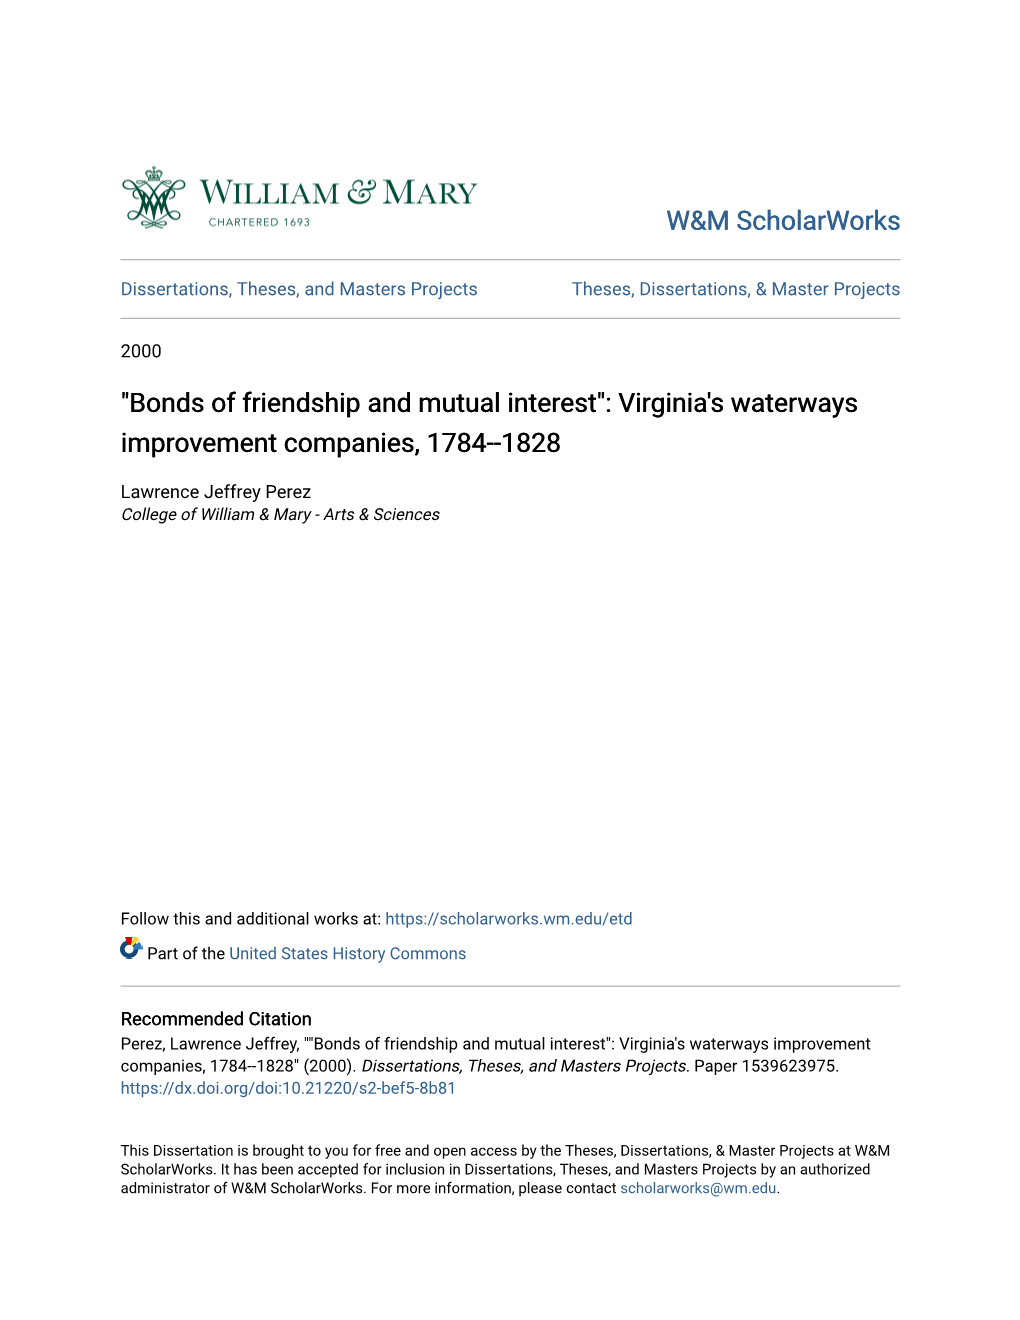 "Bonds of Friendship and Mutual Interest": Virginia's Waterways Improvement Companies, 1784--1828